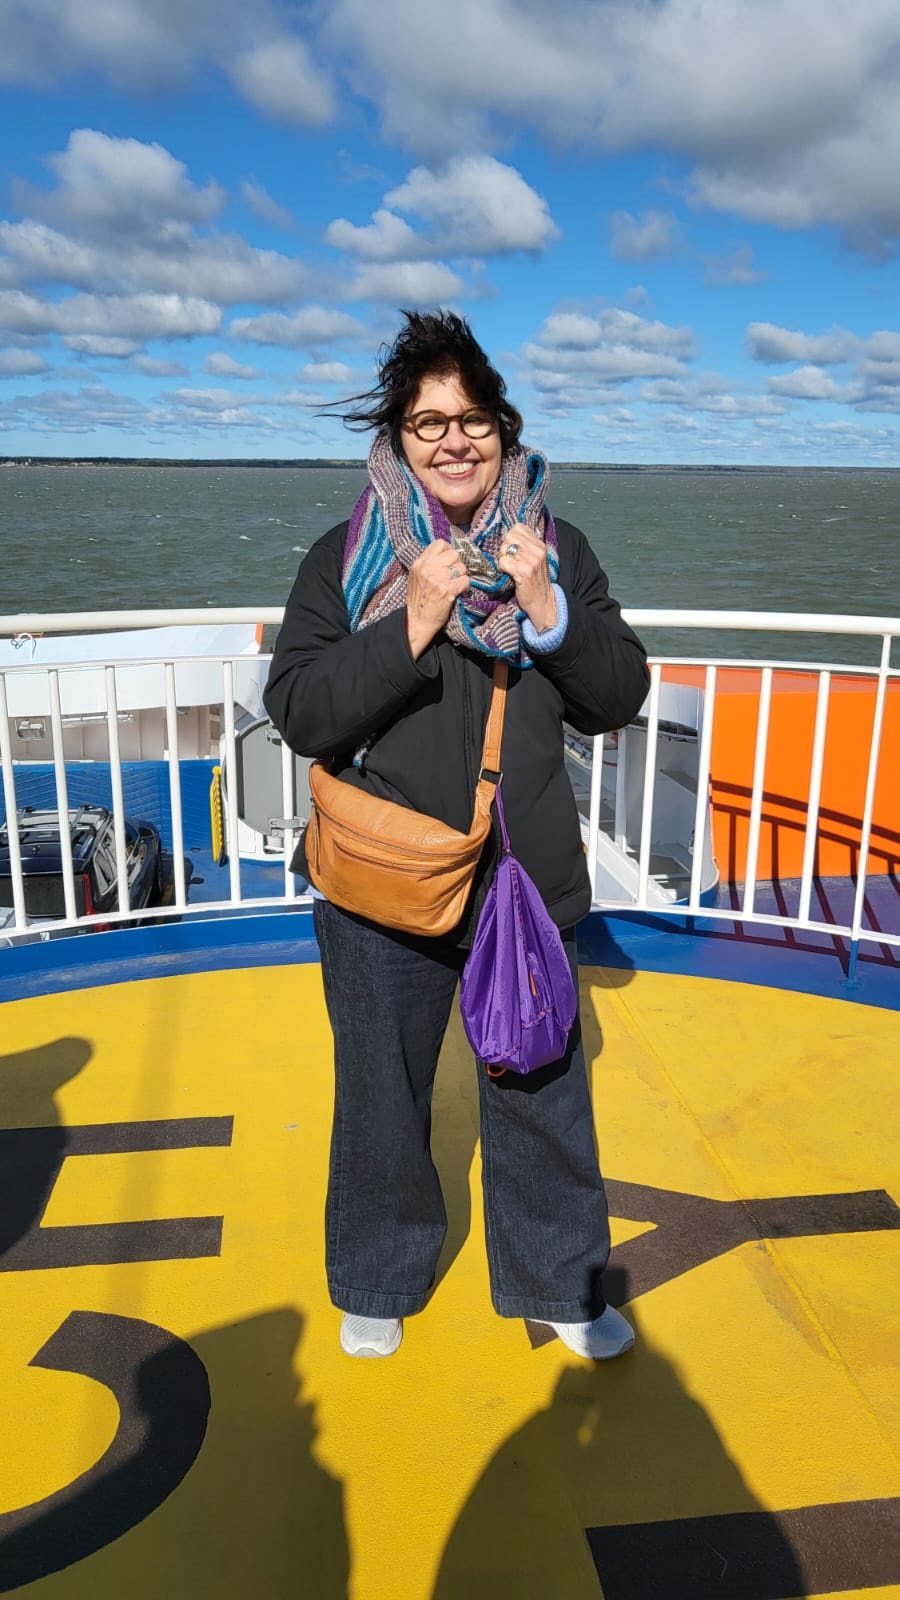 Ferry to Muhu Island, Estonia